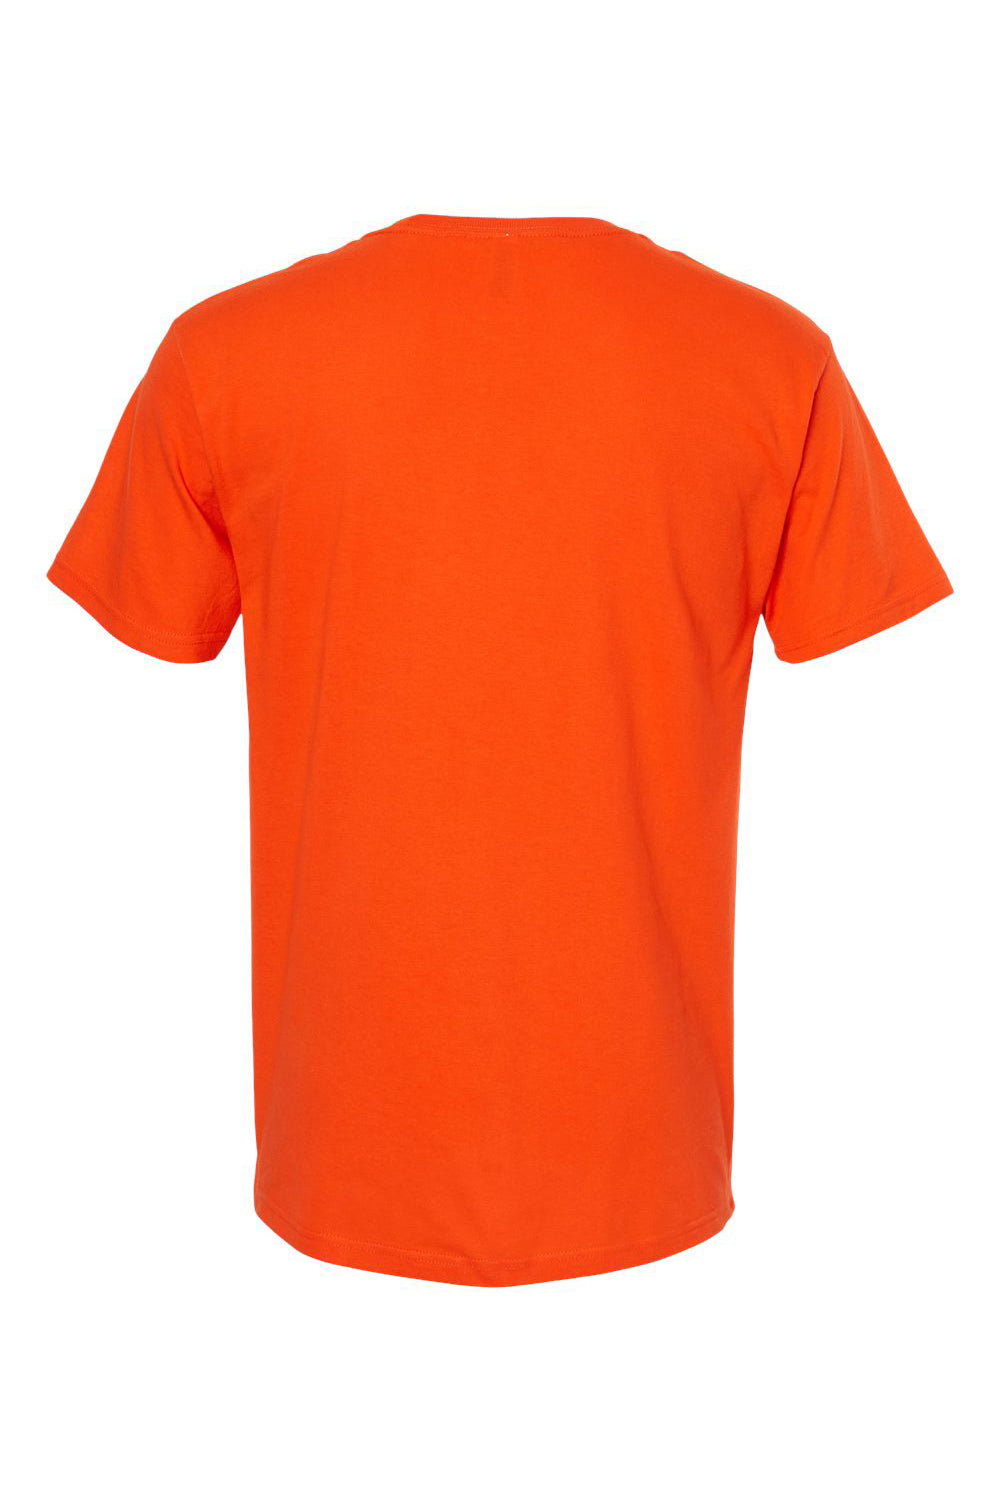 M&O 4800 Mens Gold Soft Touch Short Sleeve Crewneck T-Shirt Orange Flat Back